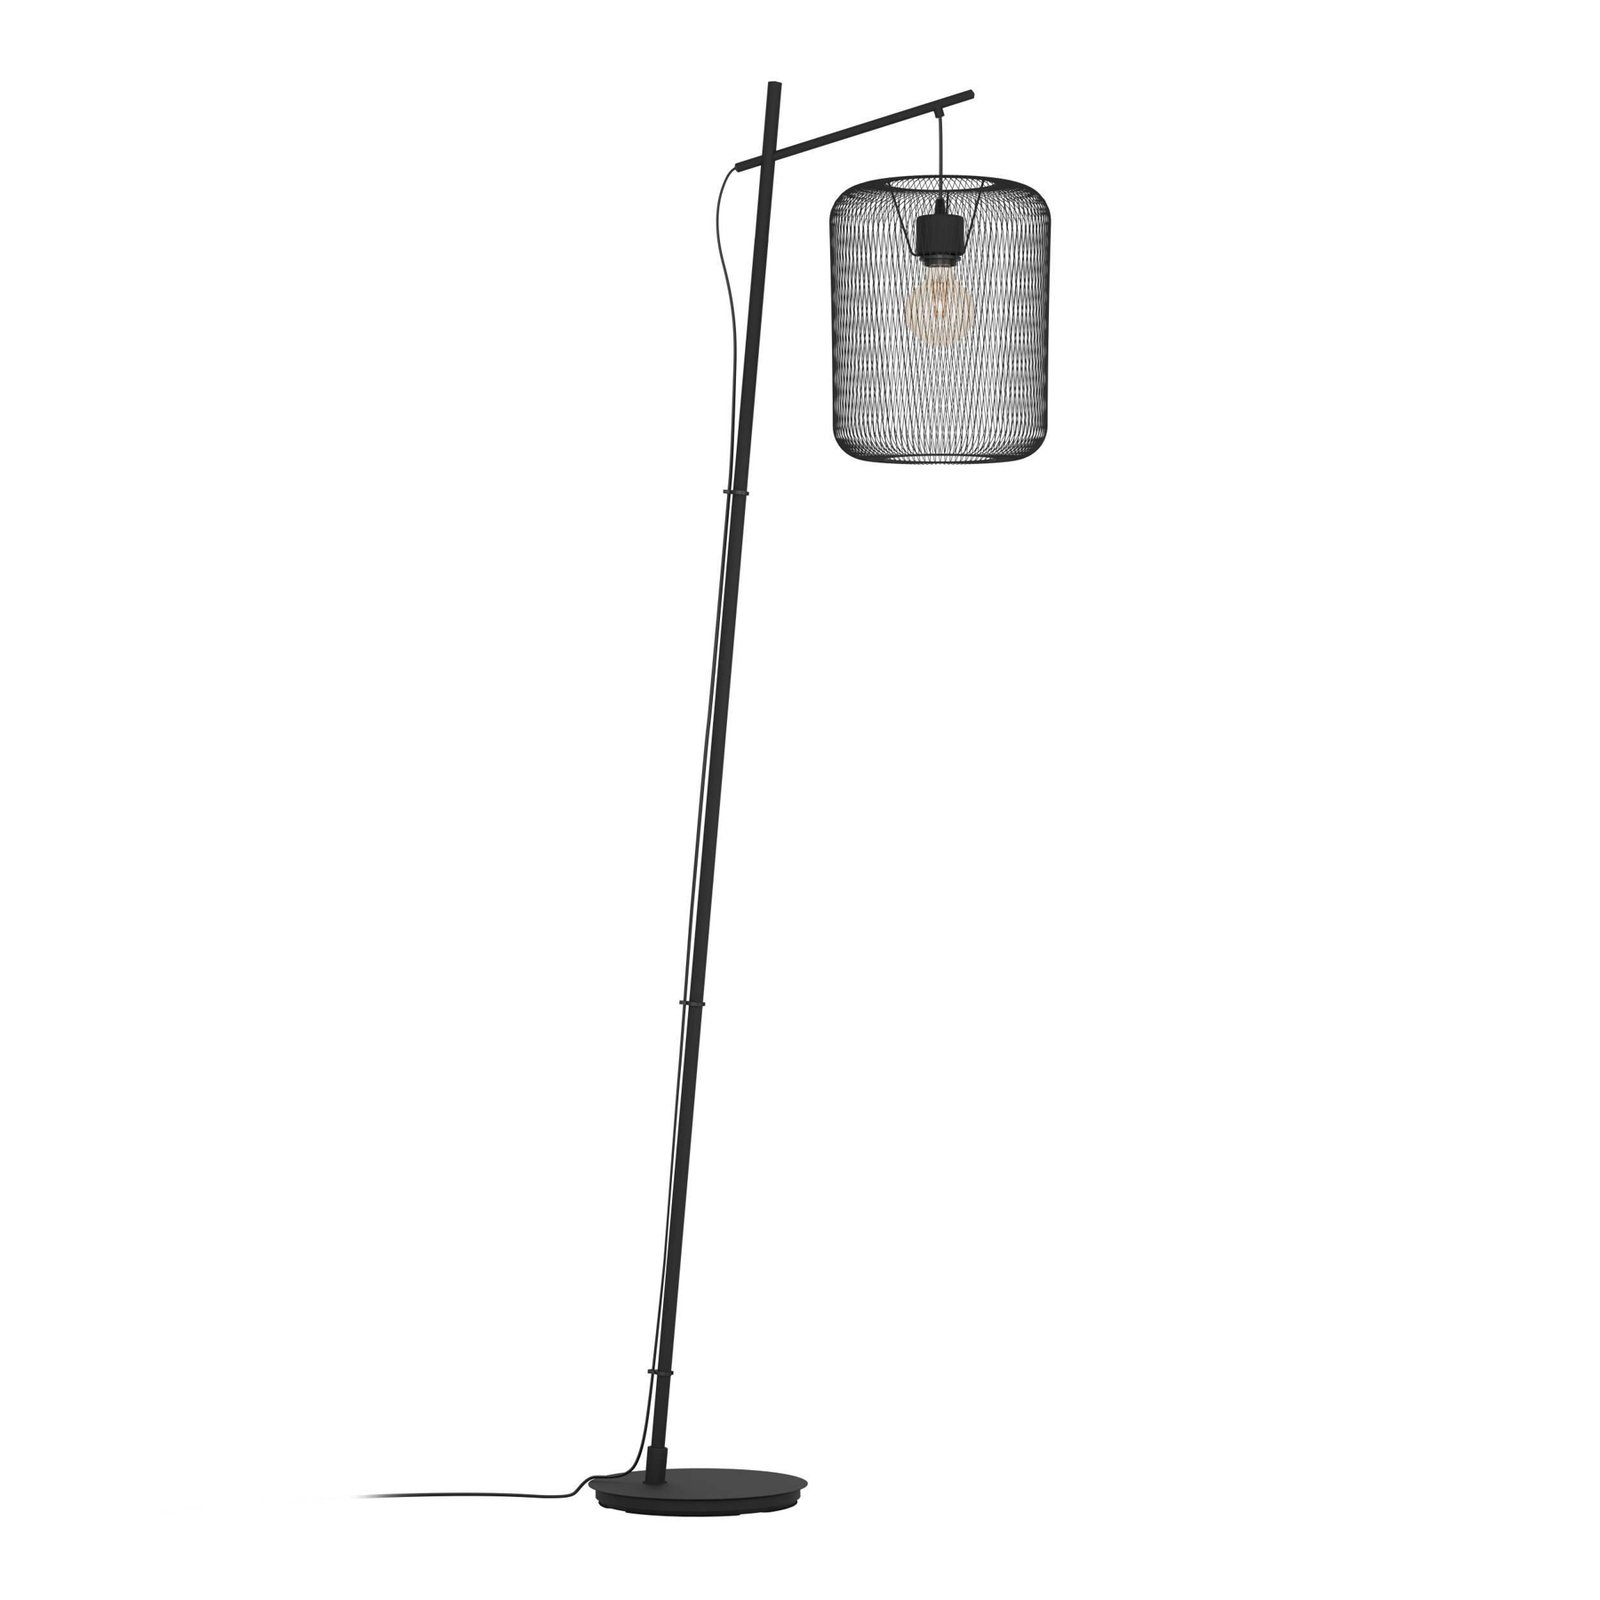 Stojacia lampa Wrington, výška 194 cm, čierna, oceľ